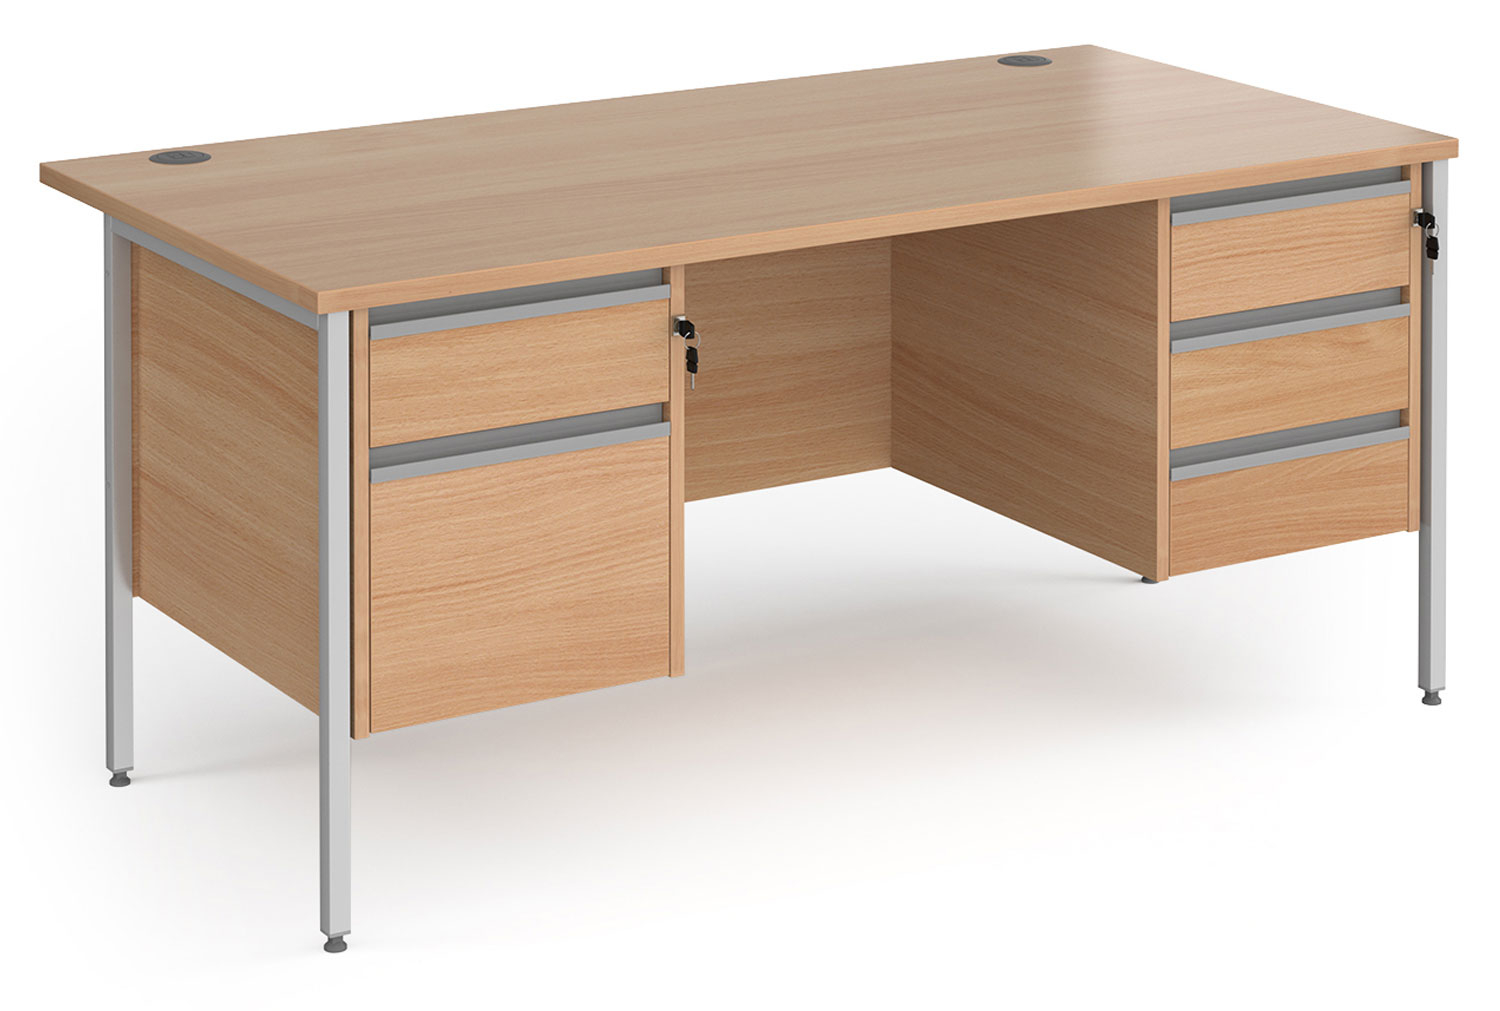 Value Line Classic+ Rectangular H-Leg Office Desk 2+3 Drawers (Silver Leg), 160wx80dx73h (cm), Beech